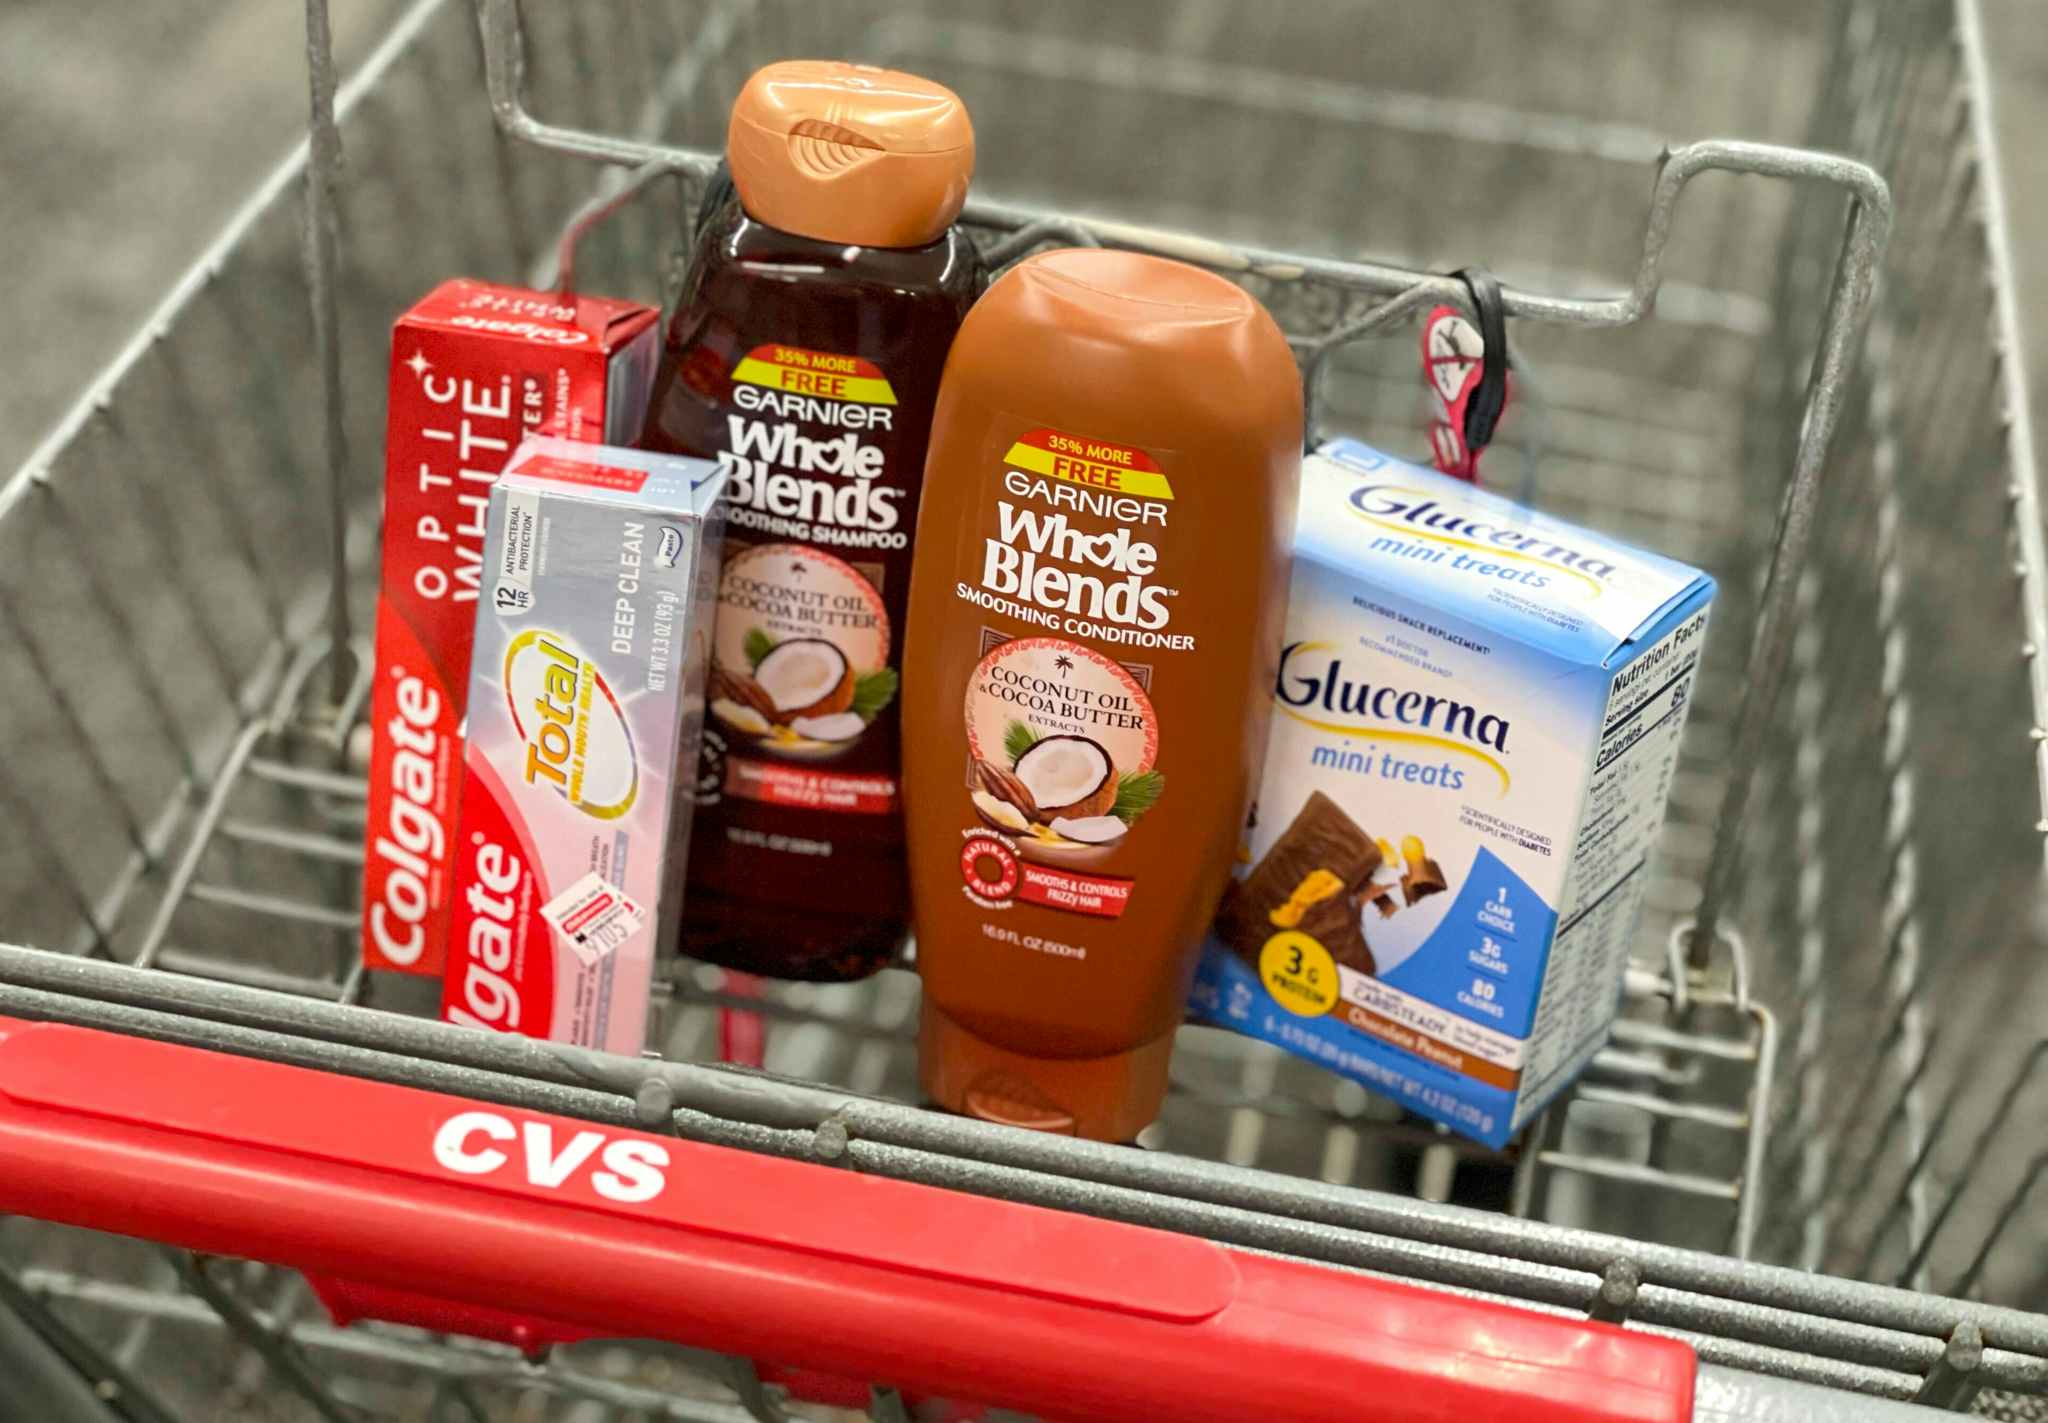 cvs shopping cart with colgate, garnier, and glucerna